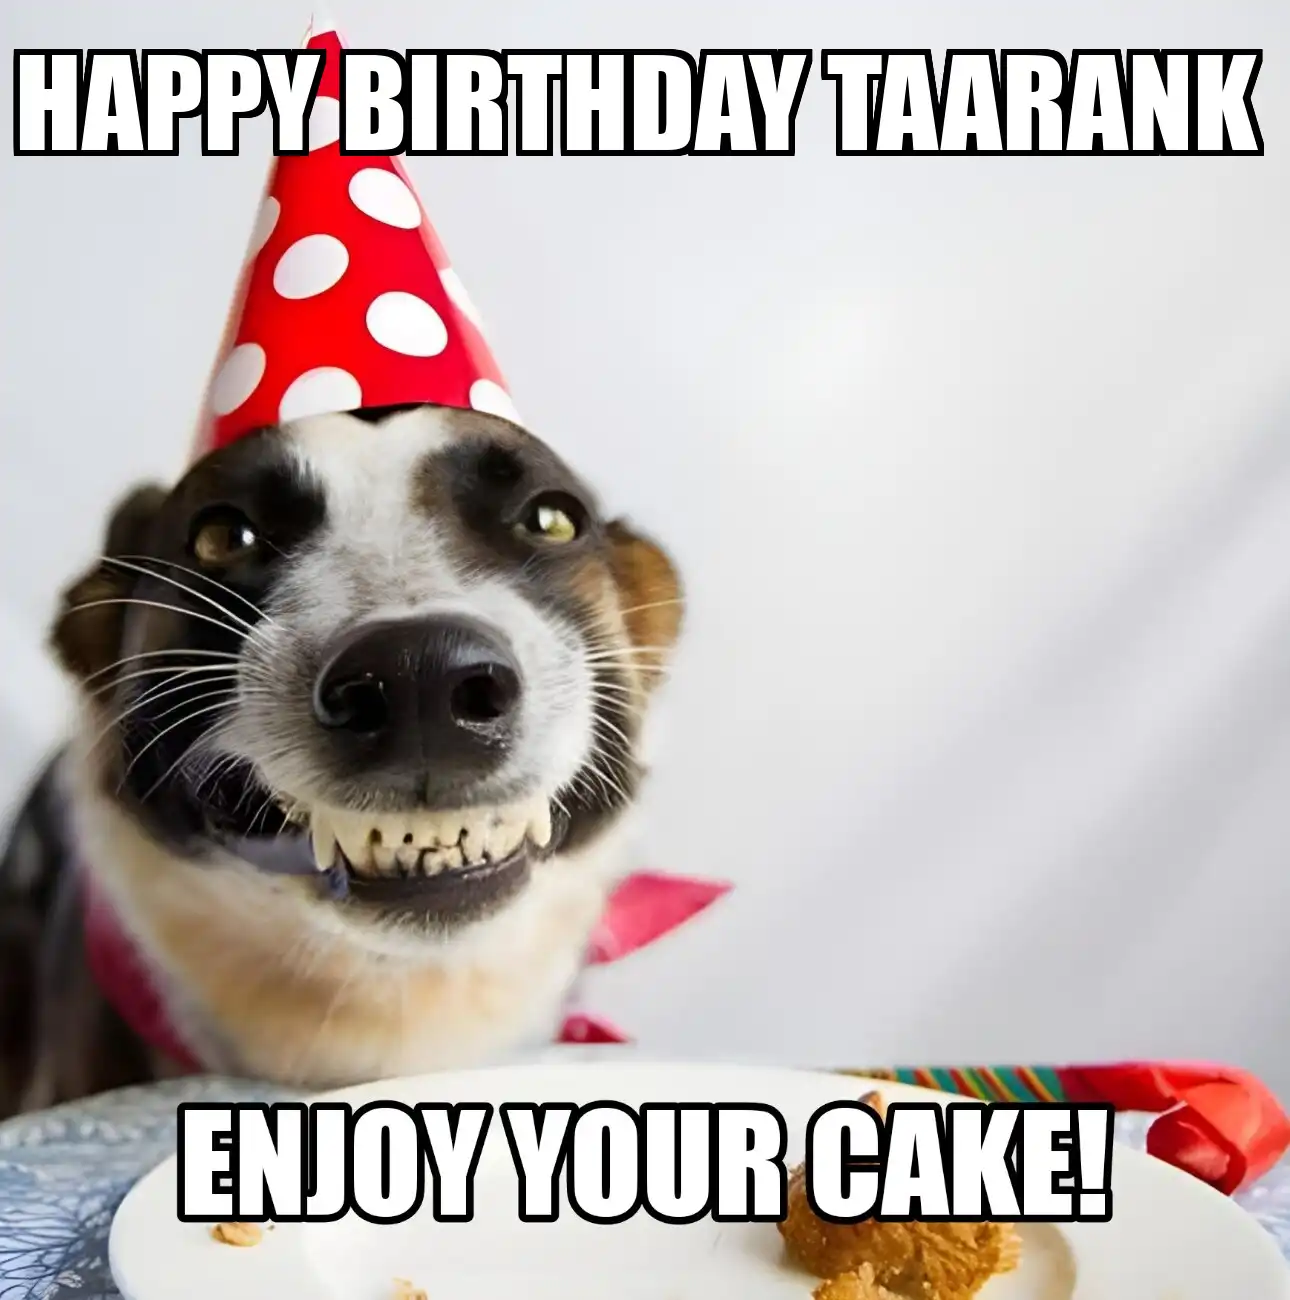 Happy Birthday Taarank Enjoy Your Cake Dog Meme